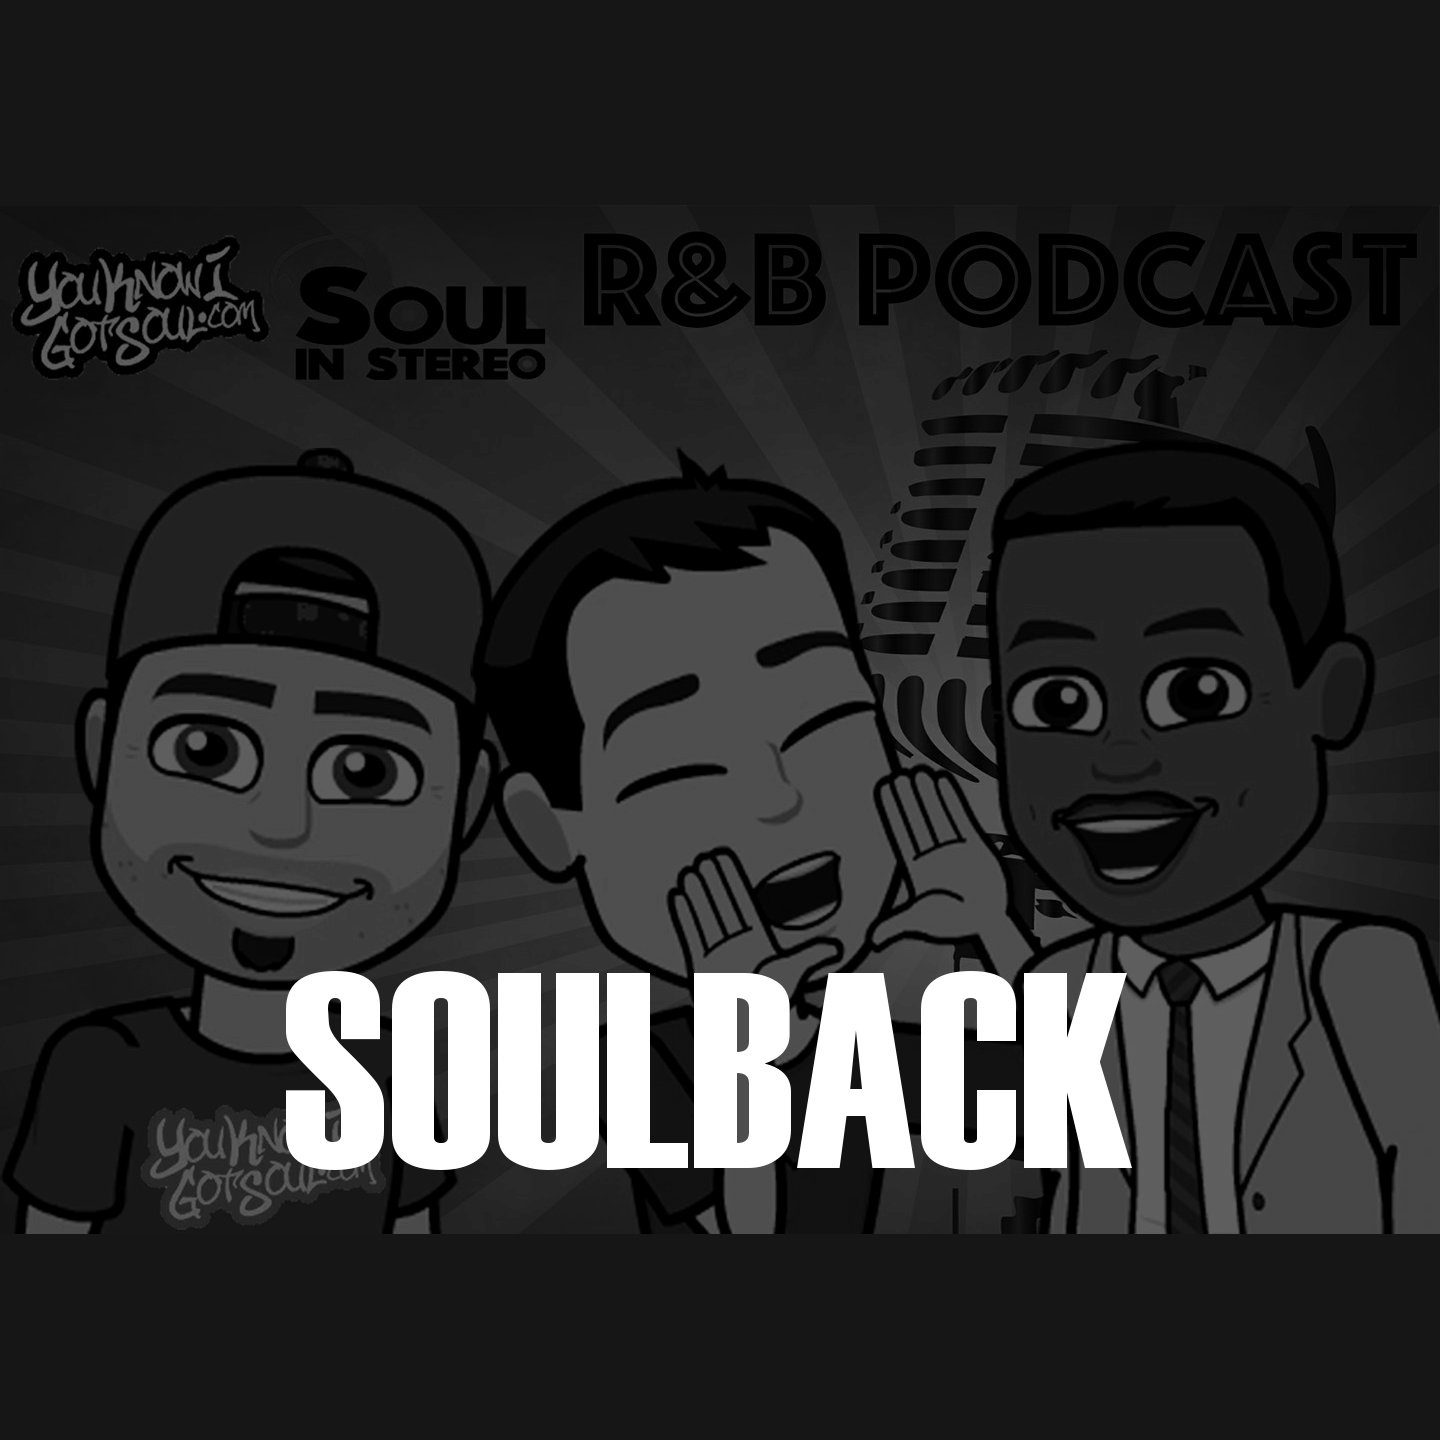 SoulBack (featuring Jermaine Dupri) – The R&B Podcast Episode 7